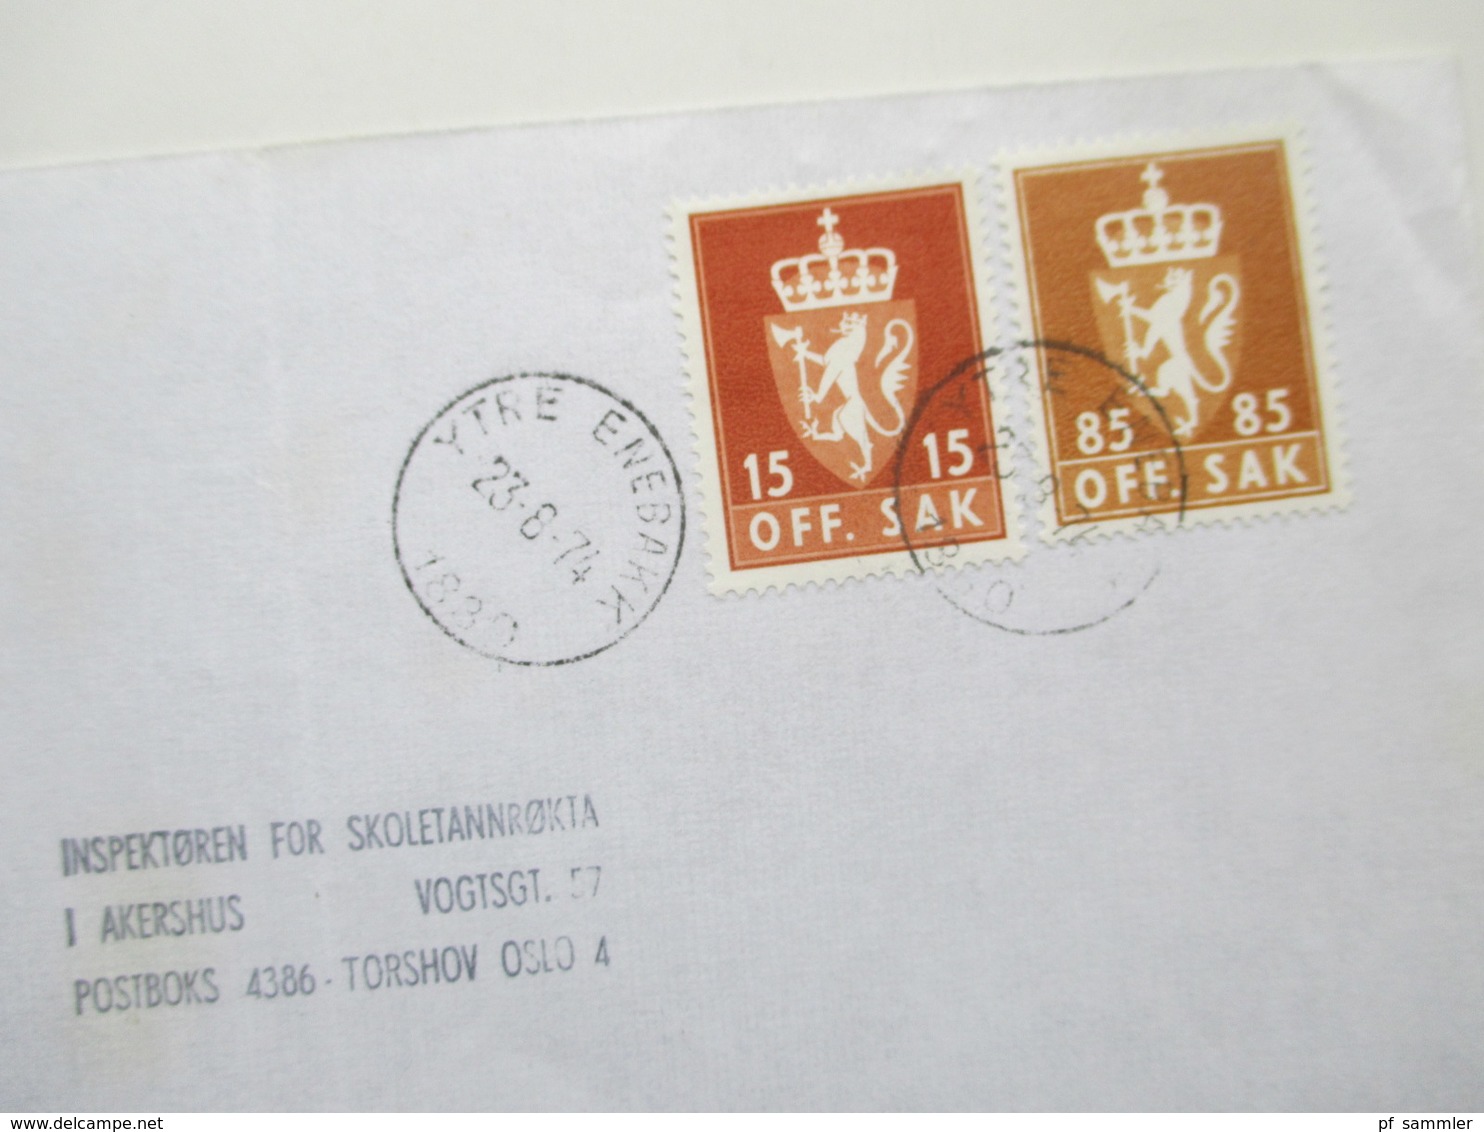 Norwegen 1972 Dienstmarken 5 Belege Inspektoren For Skoletannrokta Akershus. Off. Sak - Dienstmarken